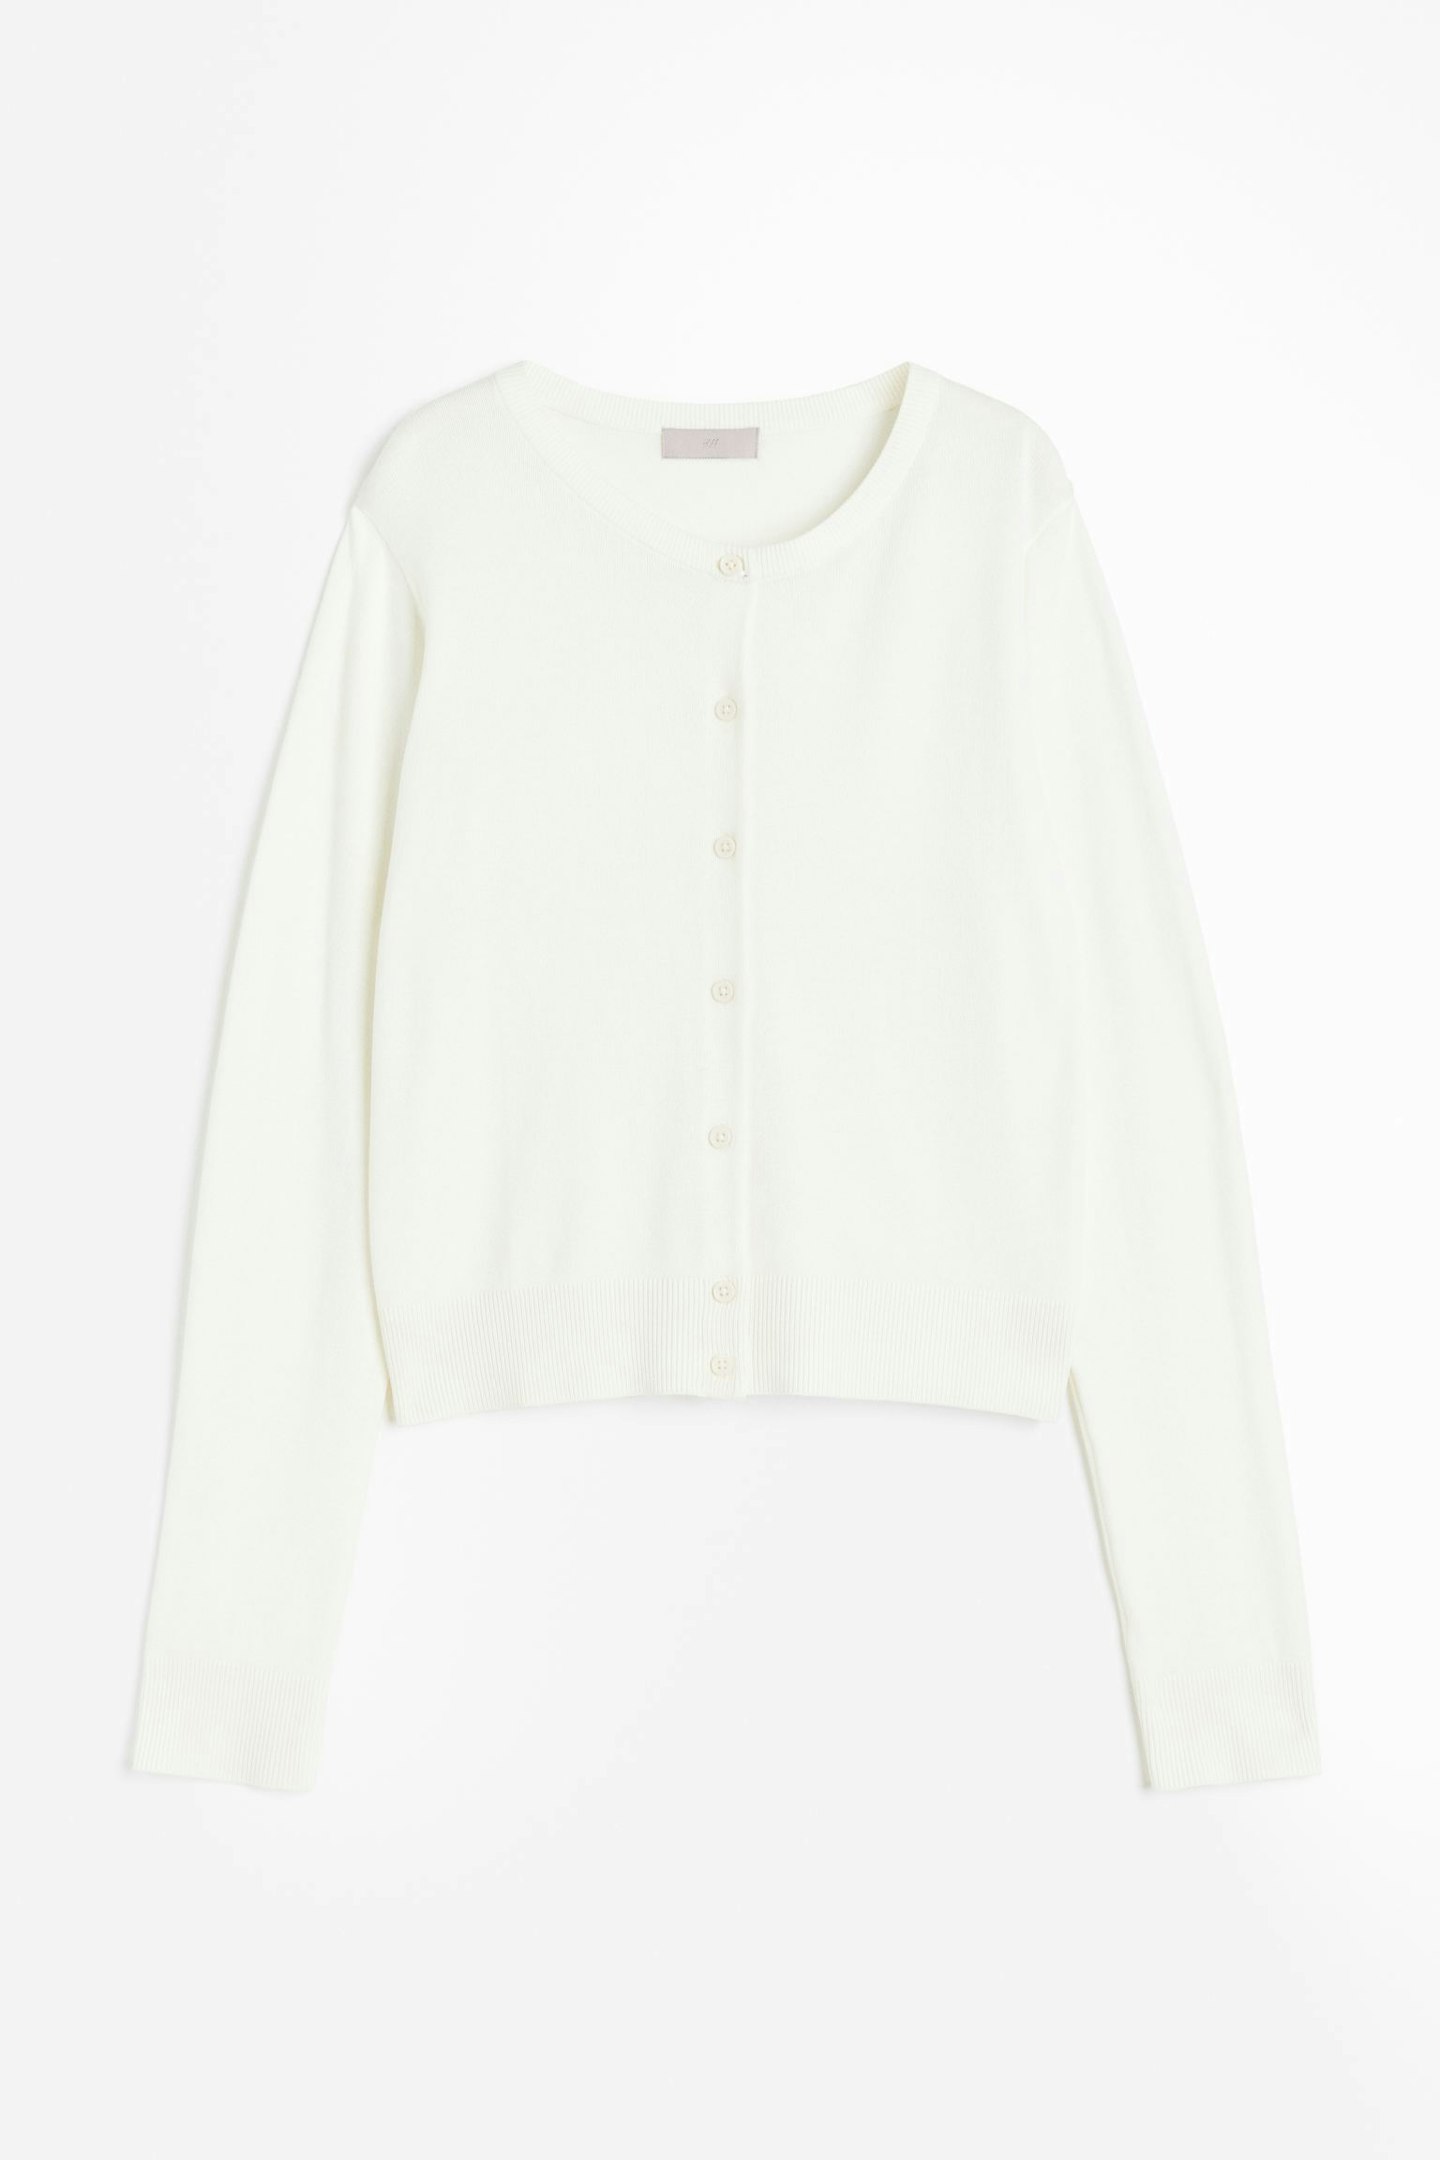 H&M white fine-knit cardigan